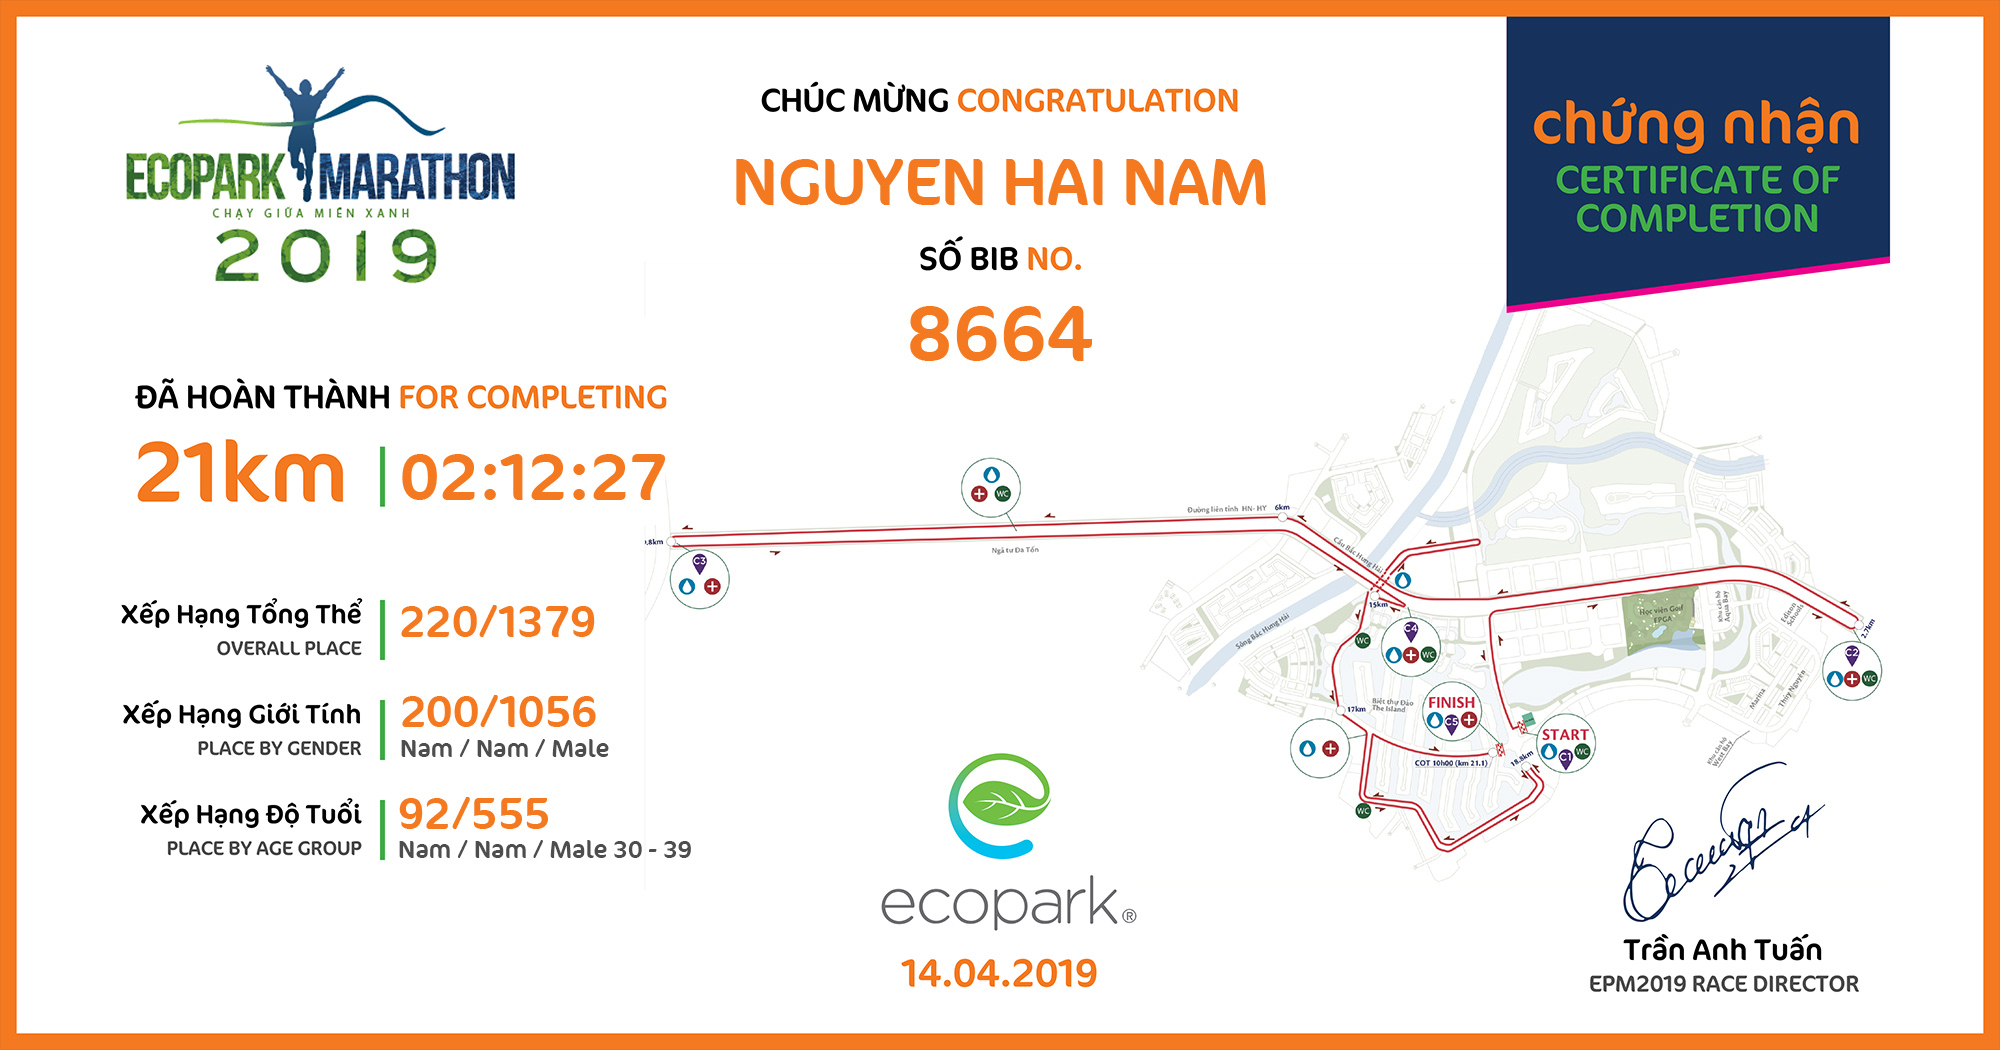 8664 - Nguyen Hai Nam